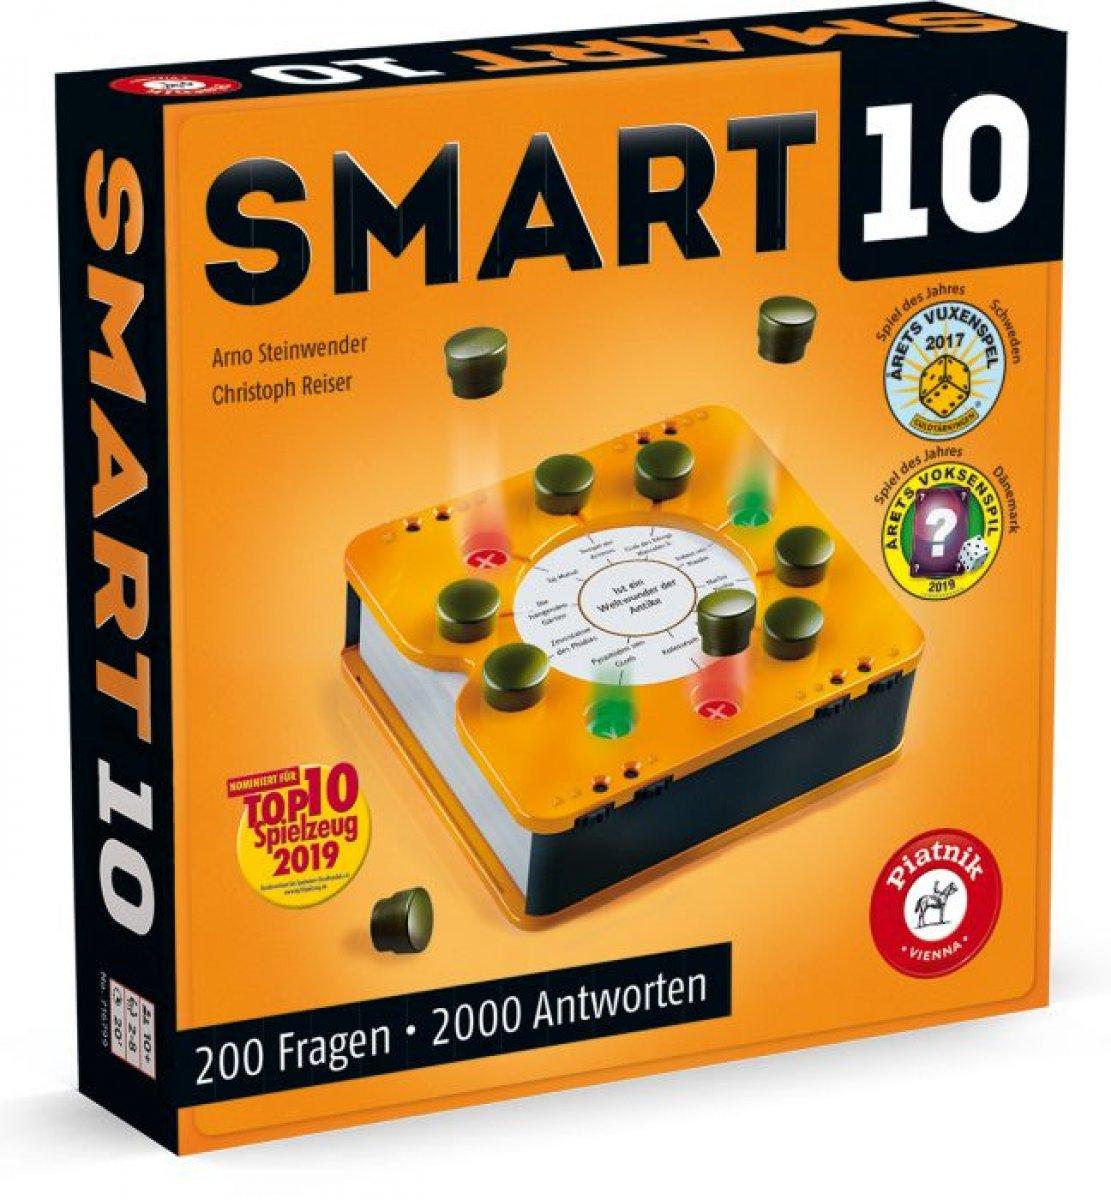 Smart 10 - das revolutionäre Quizspiel